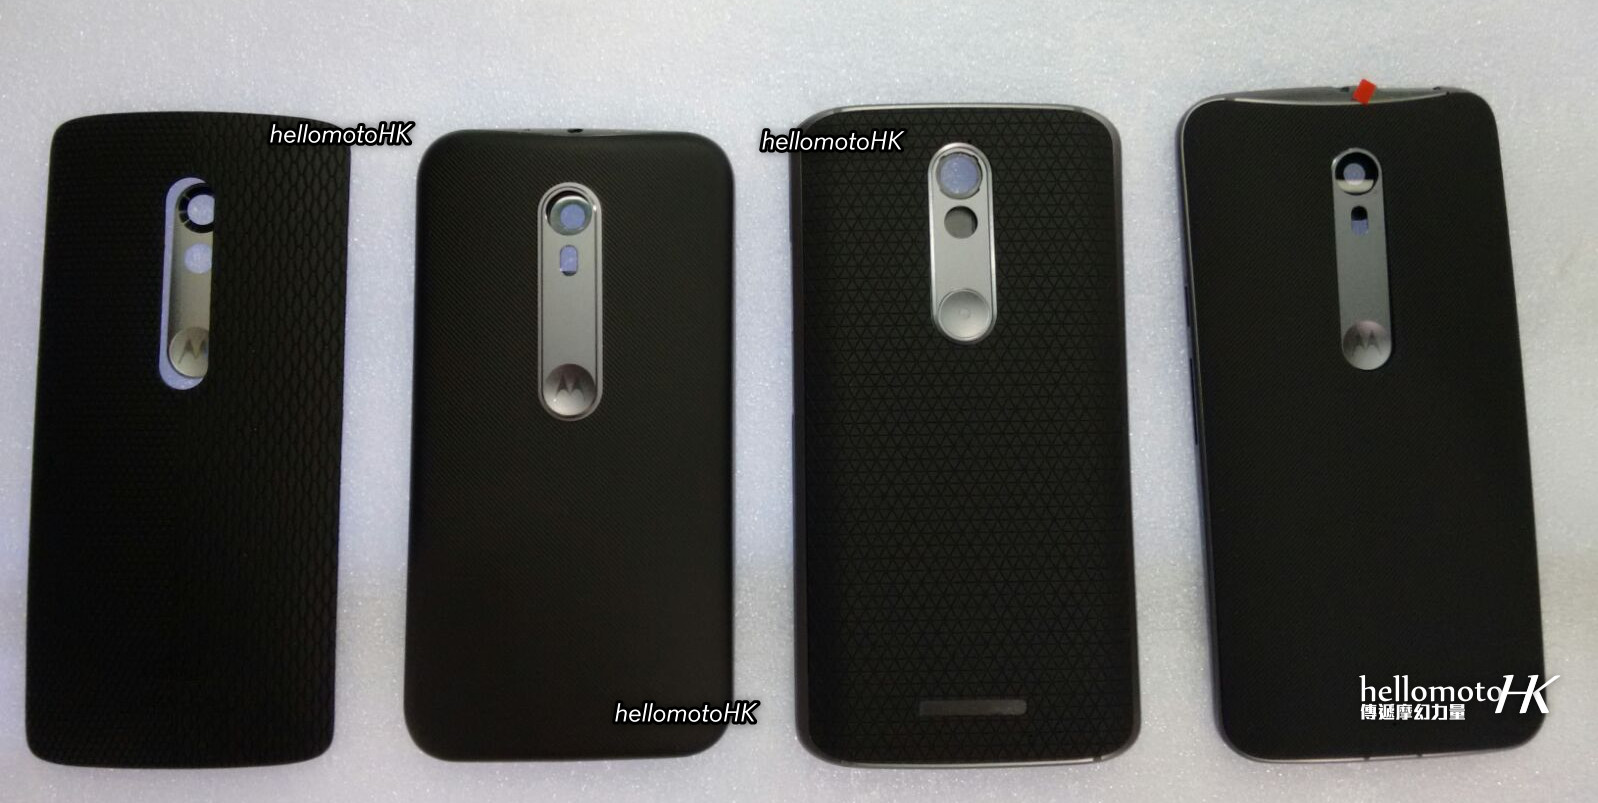 New Motorola phones